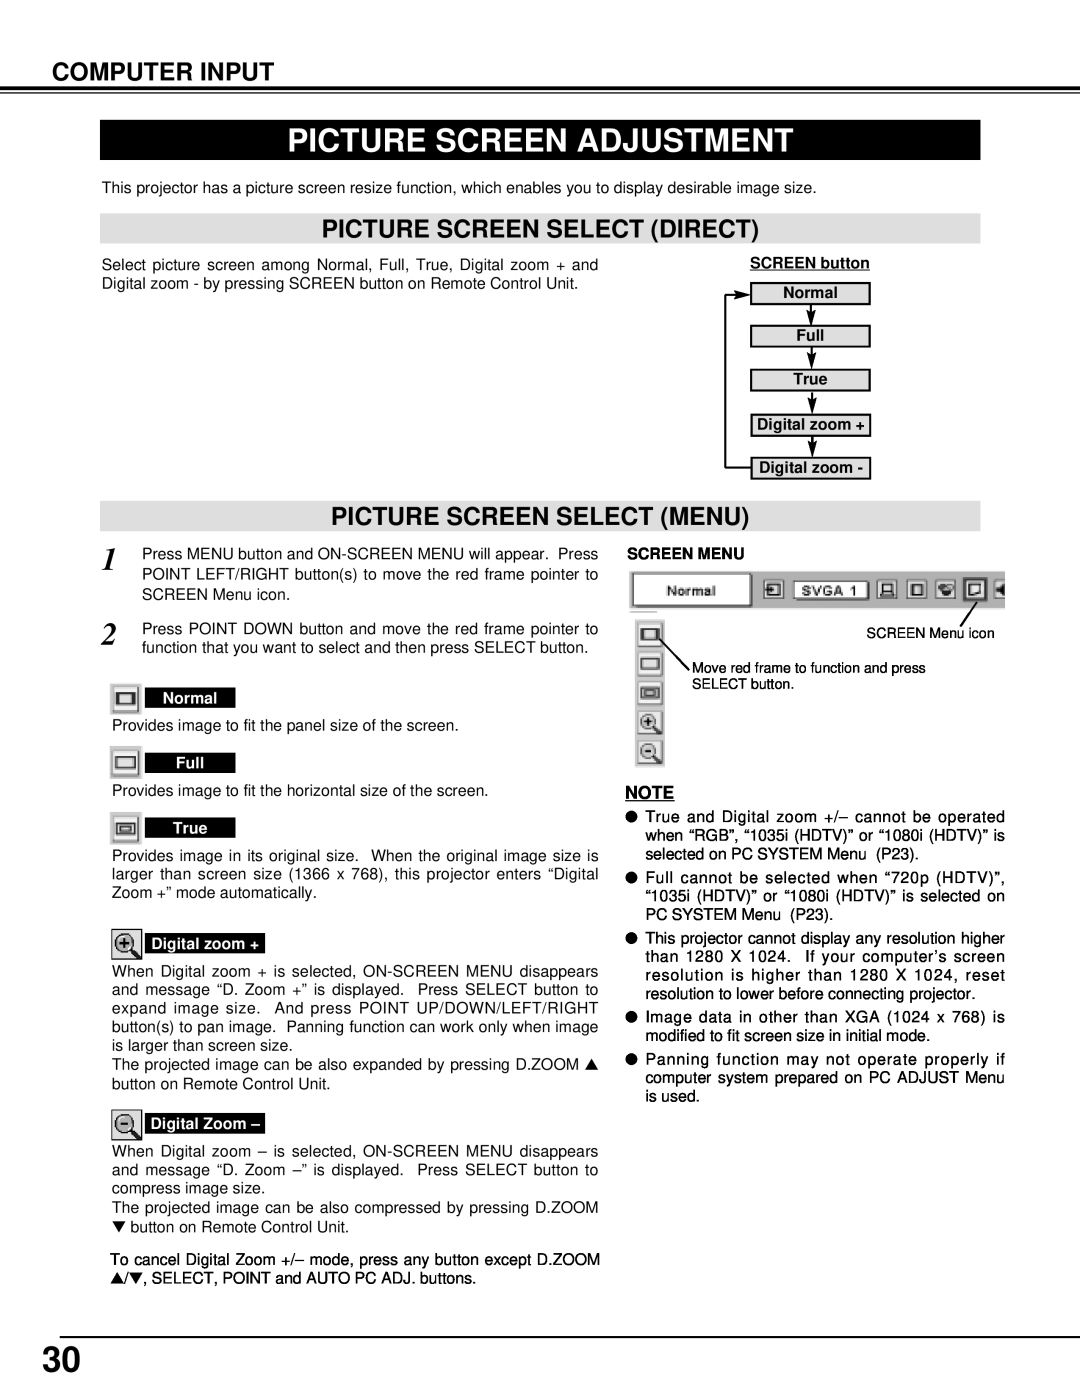 BOXLIGHT CINEMA 20HD Picture Screen Adjustment, Picture Screen Select Direct, Picture Screen Select Menu, Computer Input 